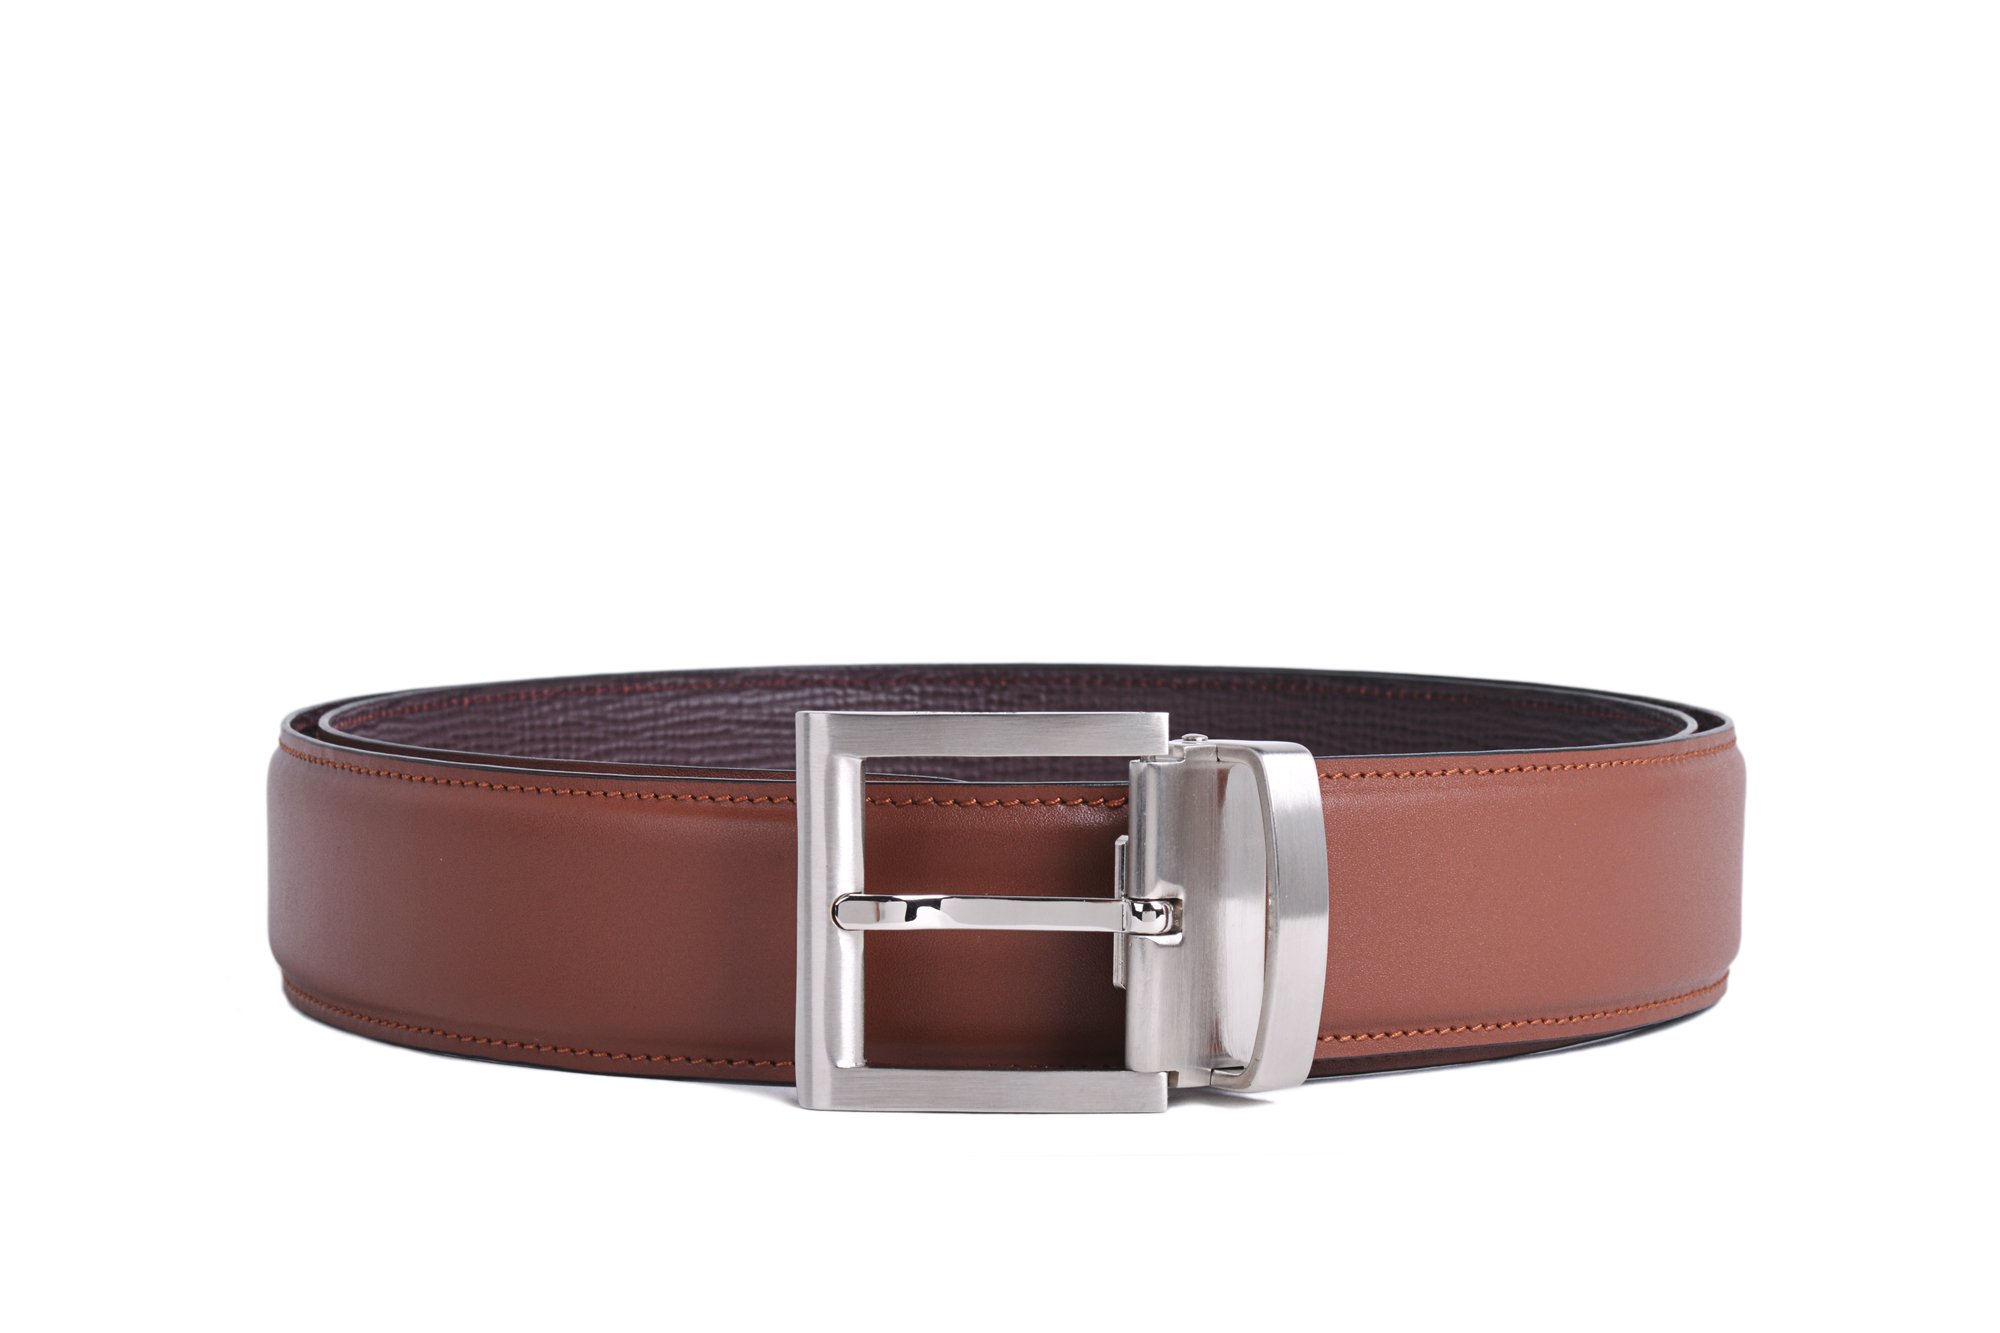 belt clipart leather strap